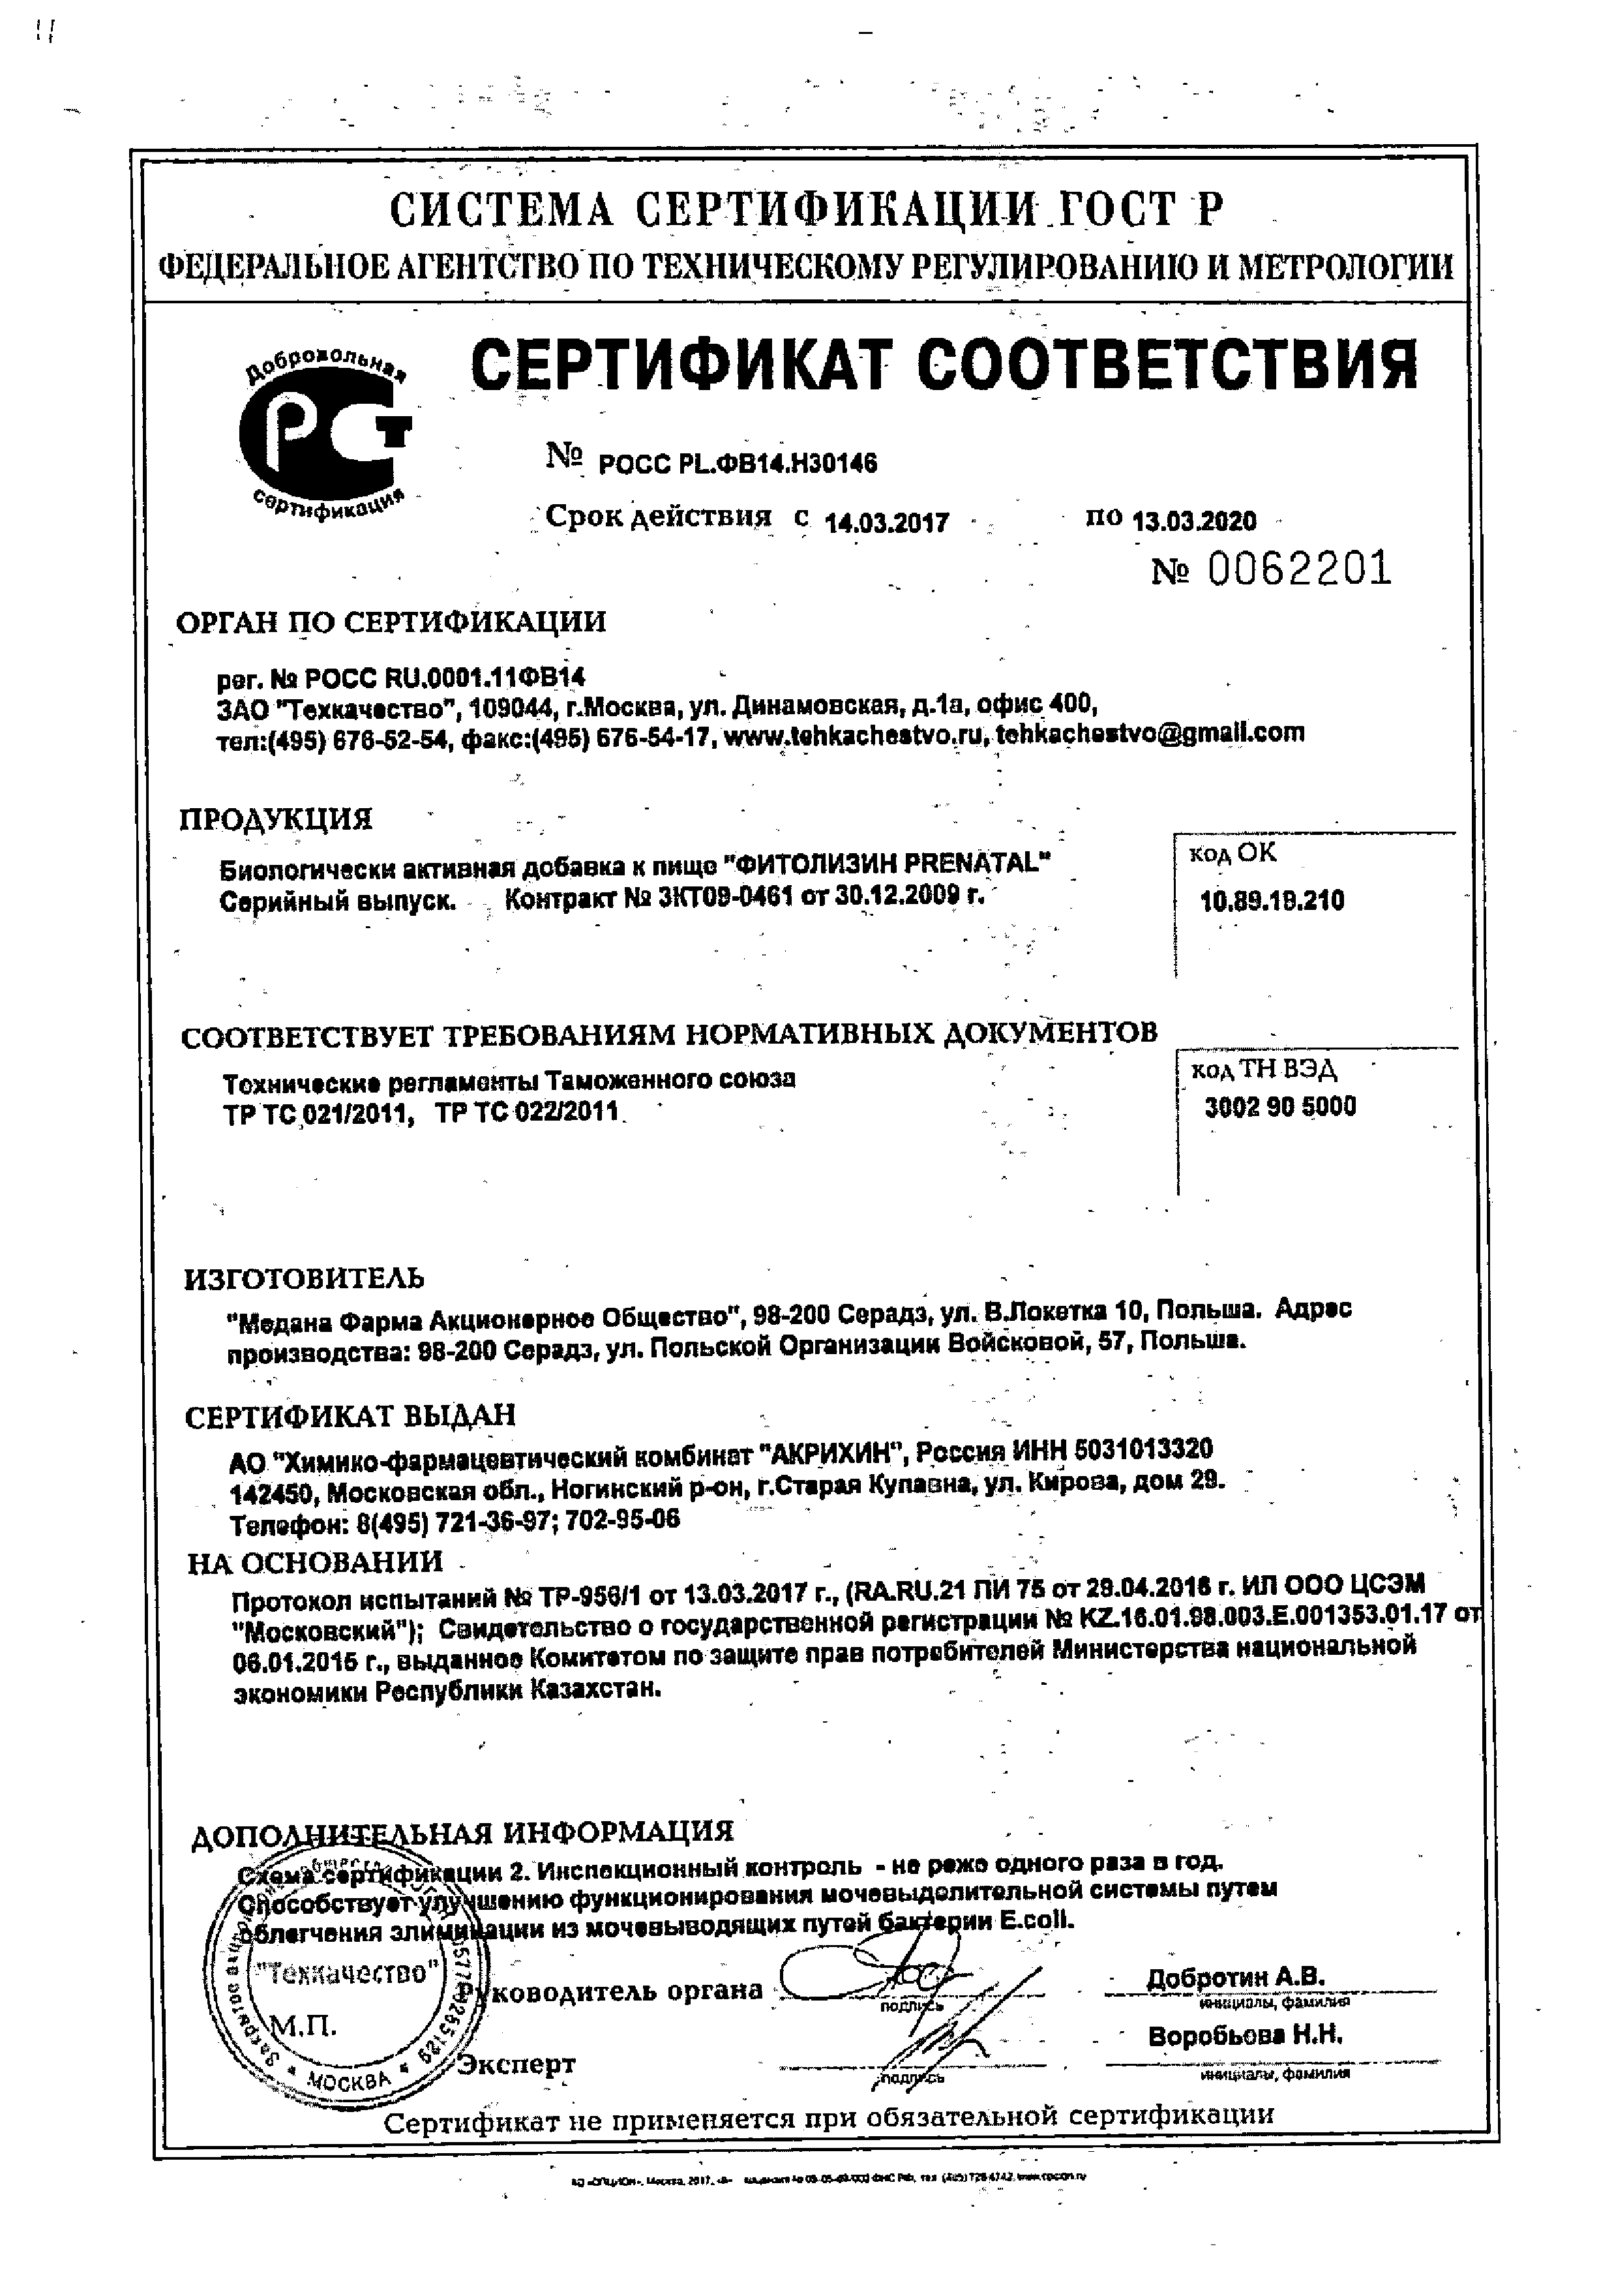 Фитолизин Пренатал сертификат